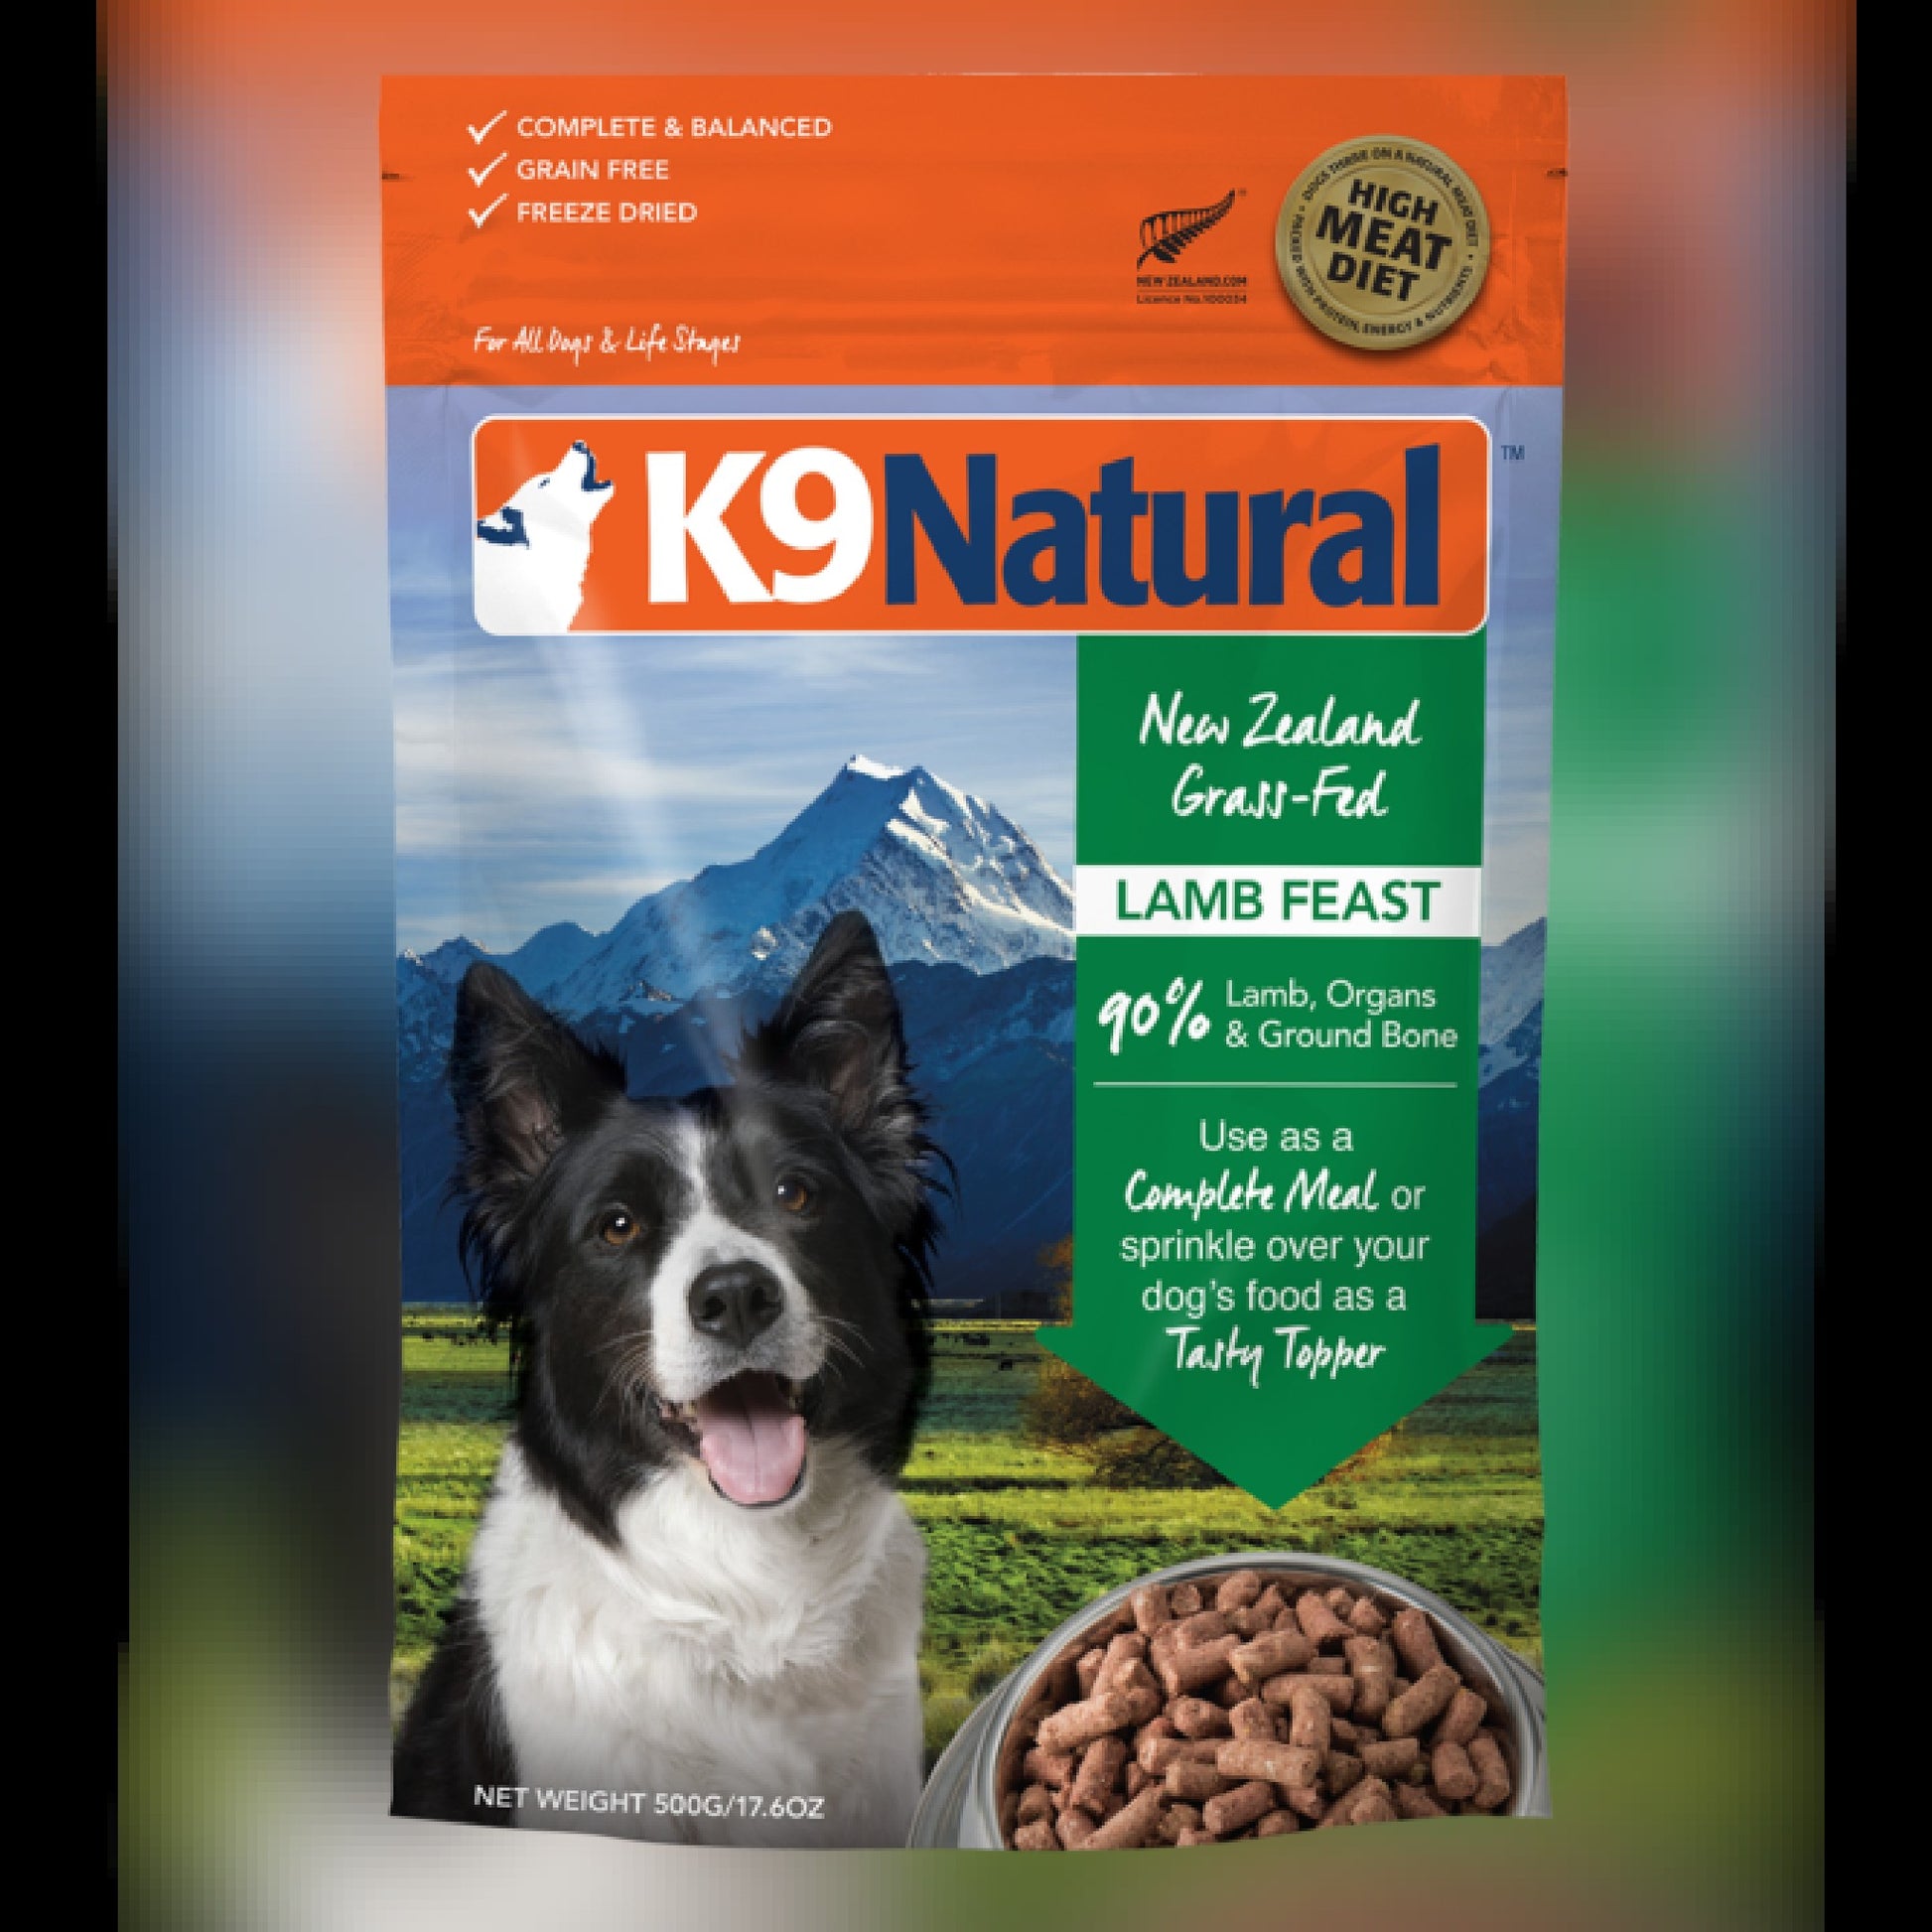 K9 NATURAL FD FOOD - LAMB FEAST - Woofur Natural Pet Products